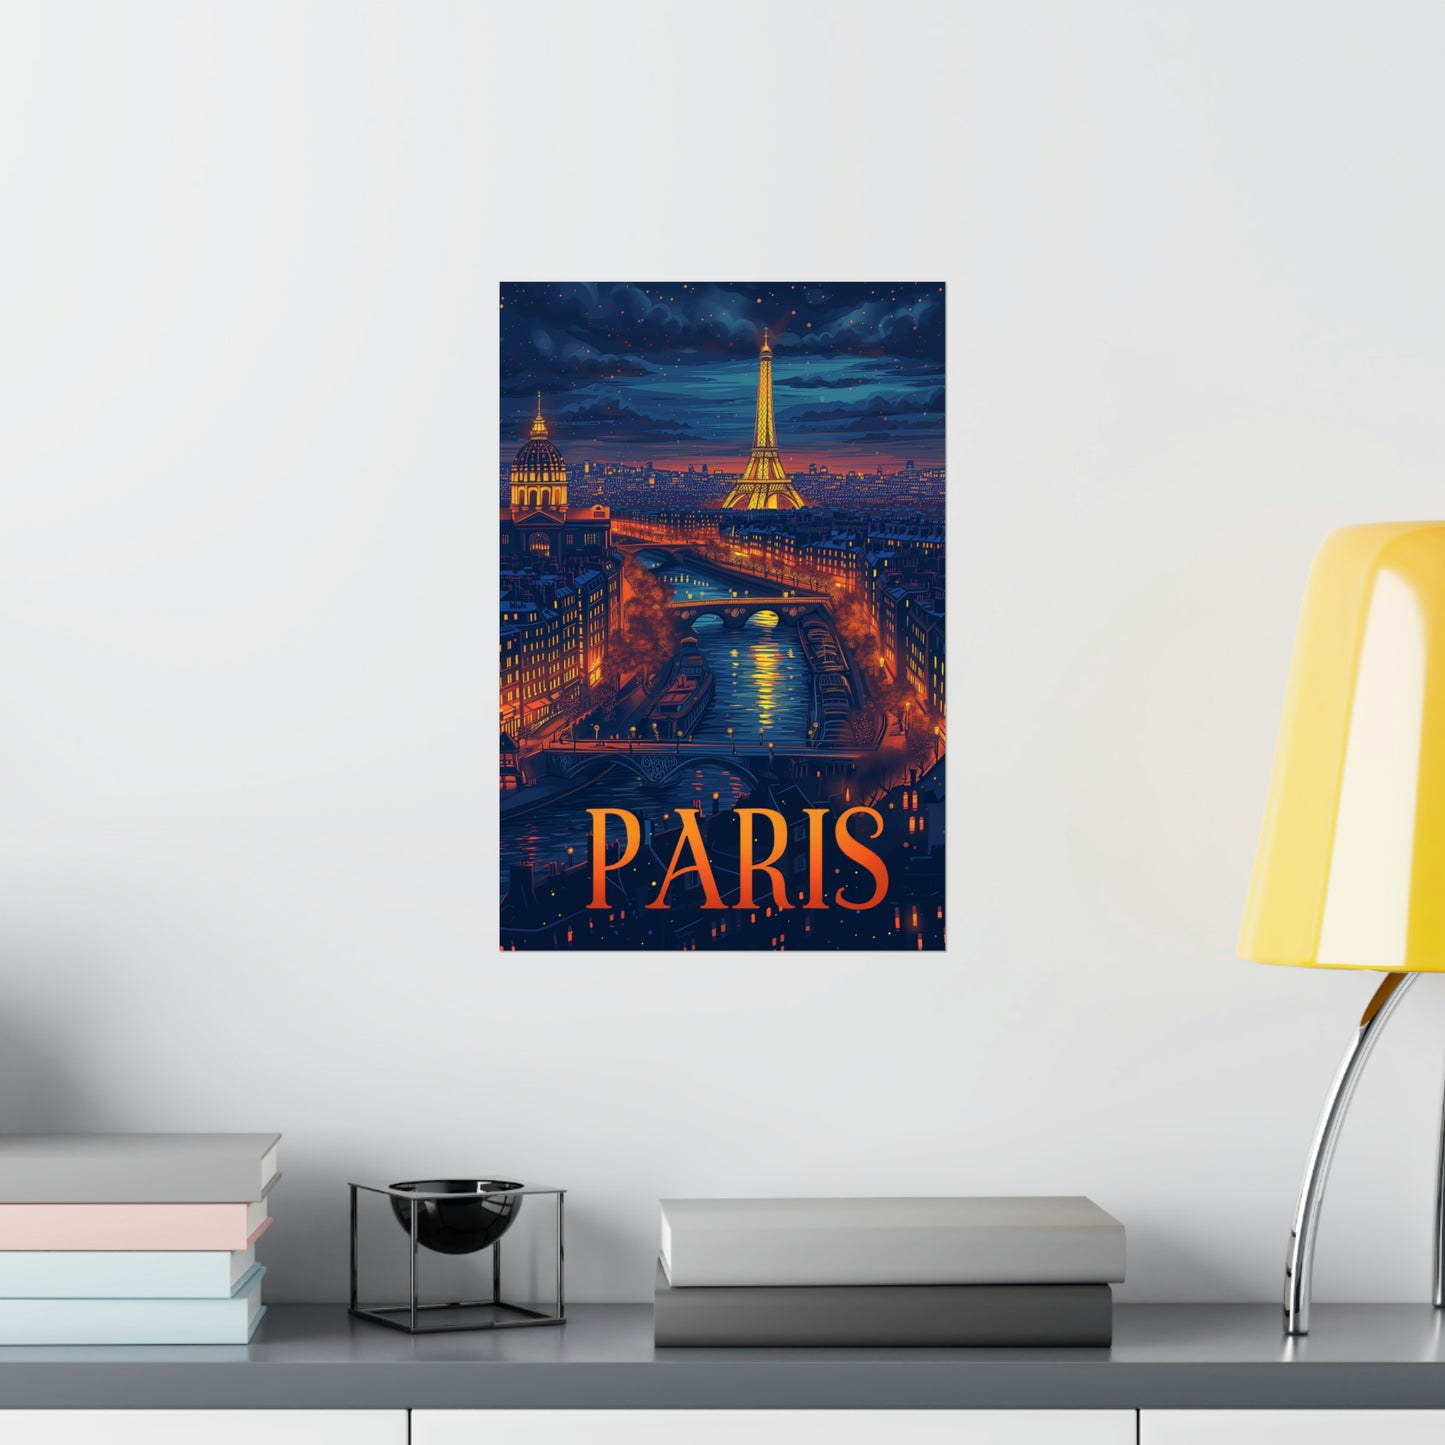 Paris France Poster Print, Eifel Tower Vintage Retro Night Wall Image Art Vertical Paper Artwork Small Large Travel Cool Room Office Decor